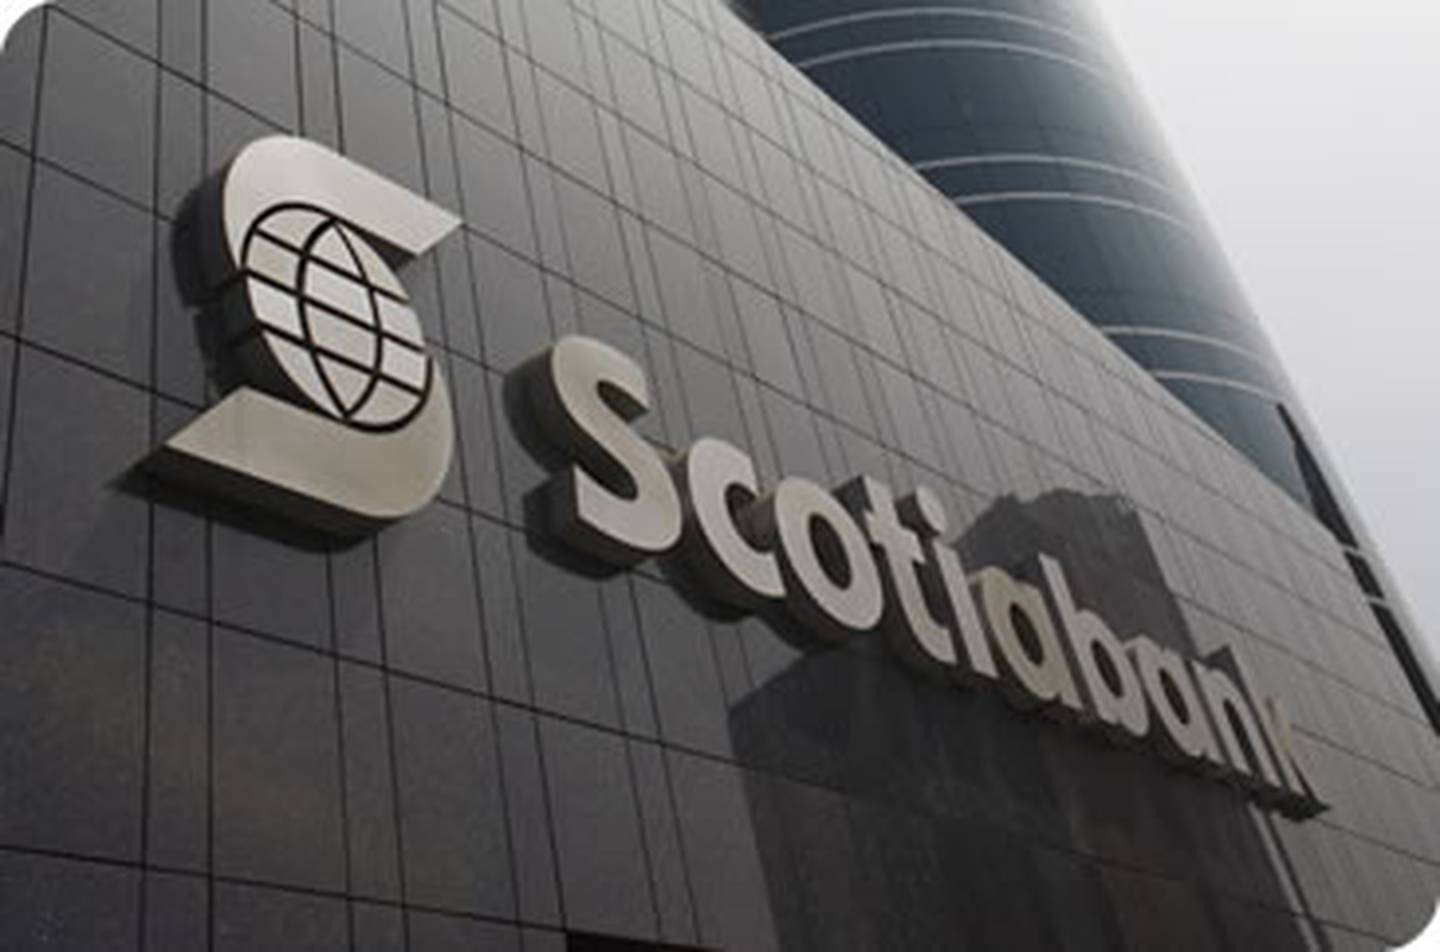 Scotia Fondos pertenece al grupo empresarial Scotiabank.dfd